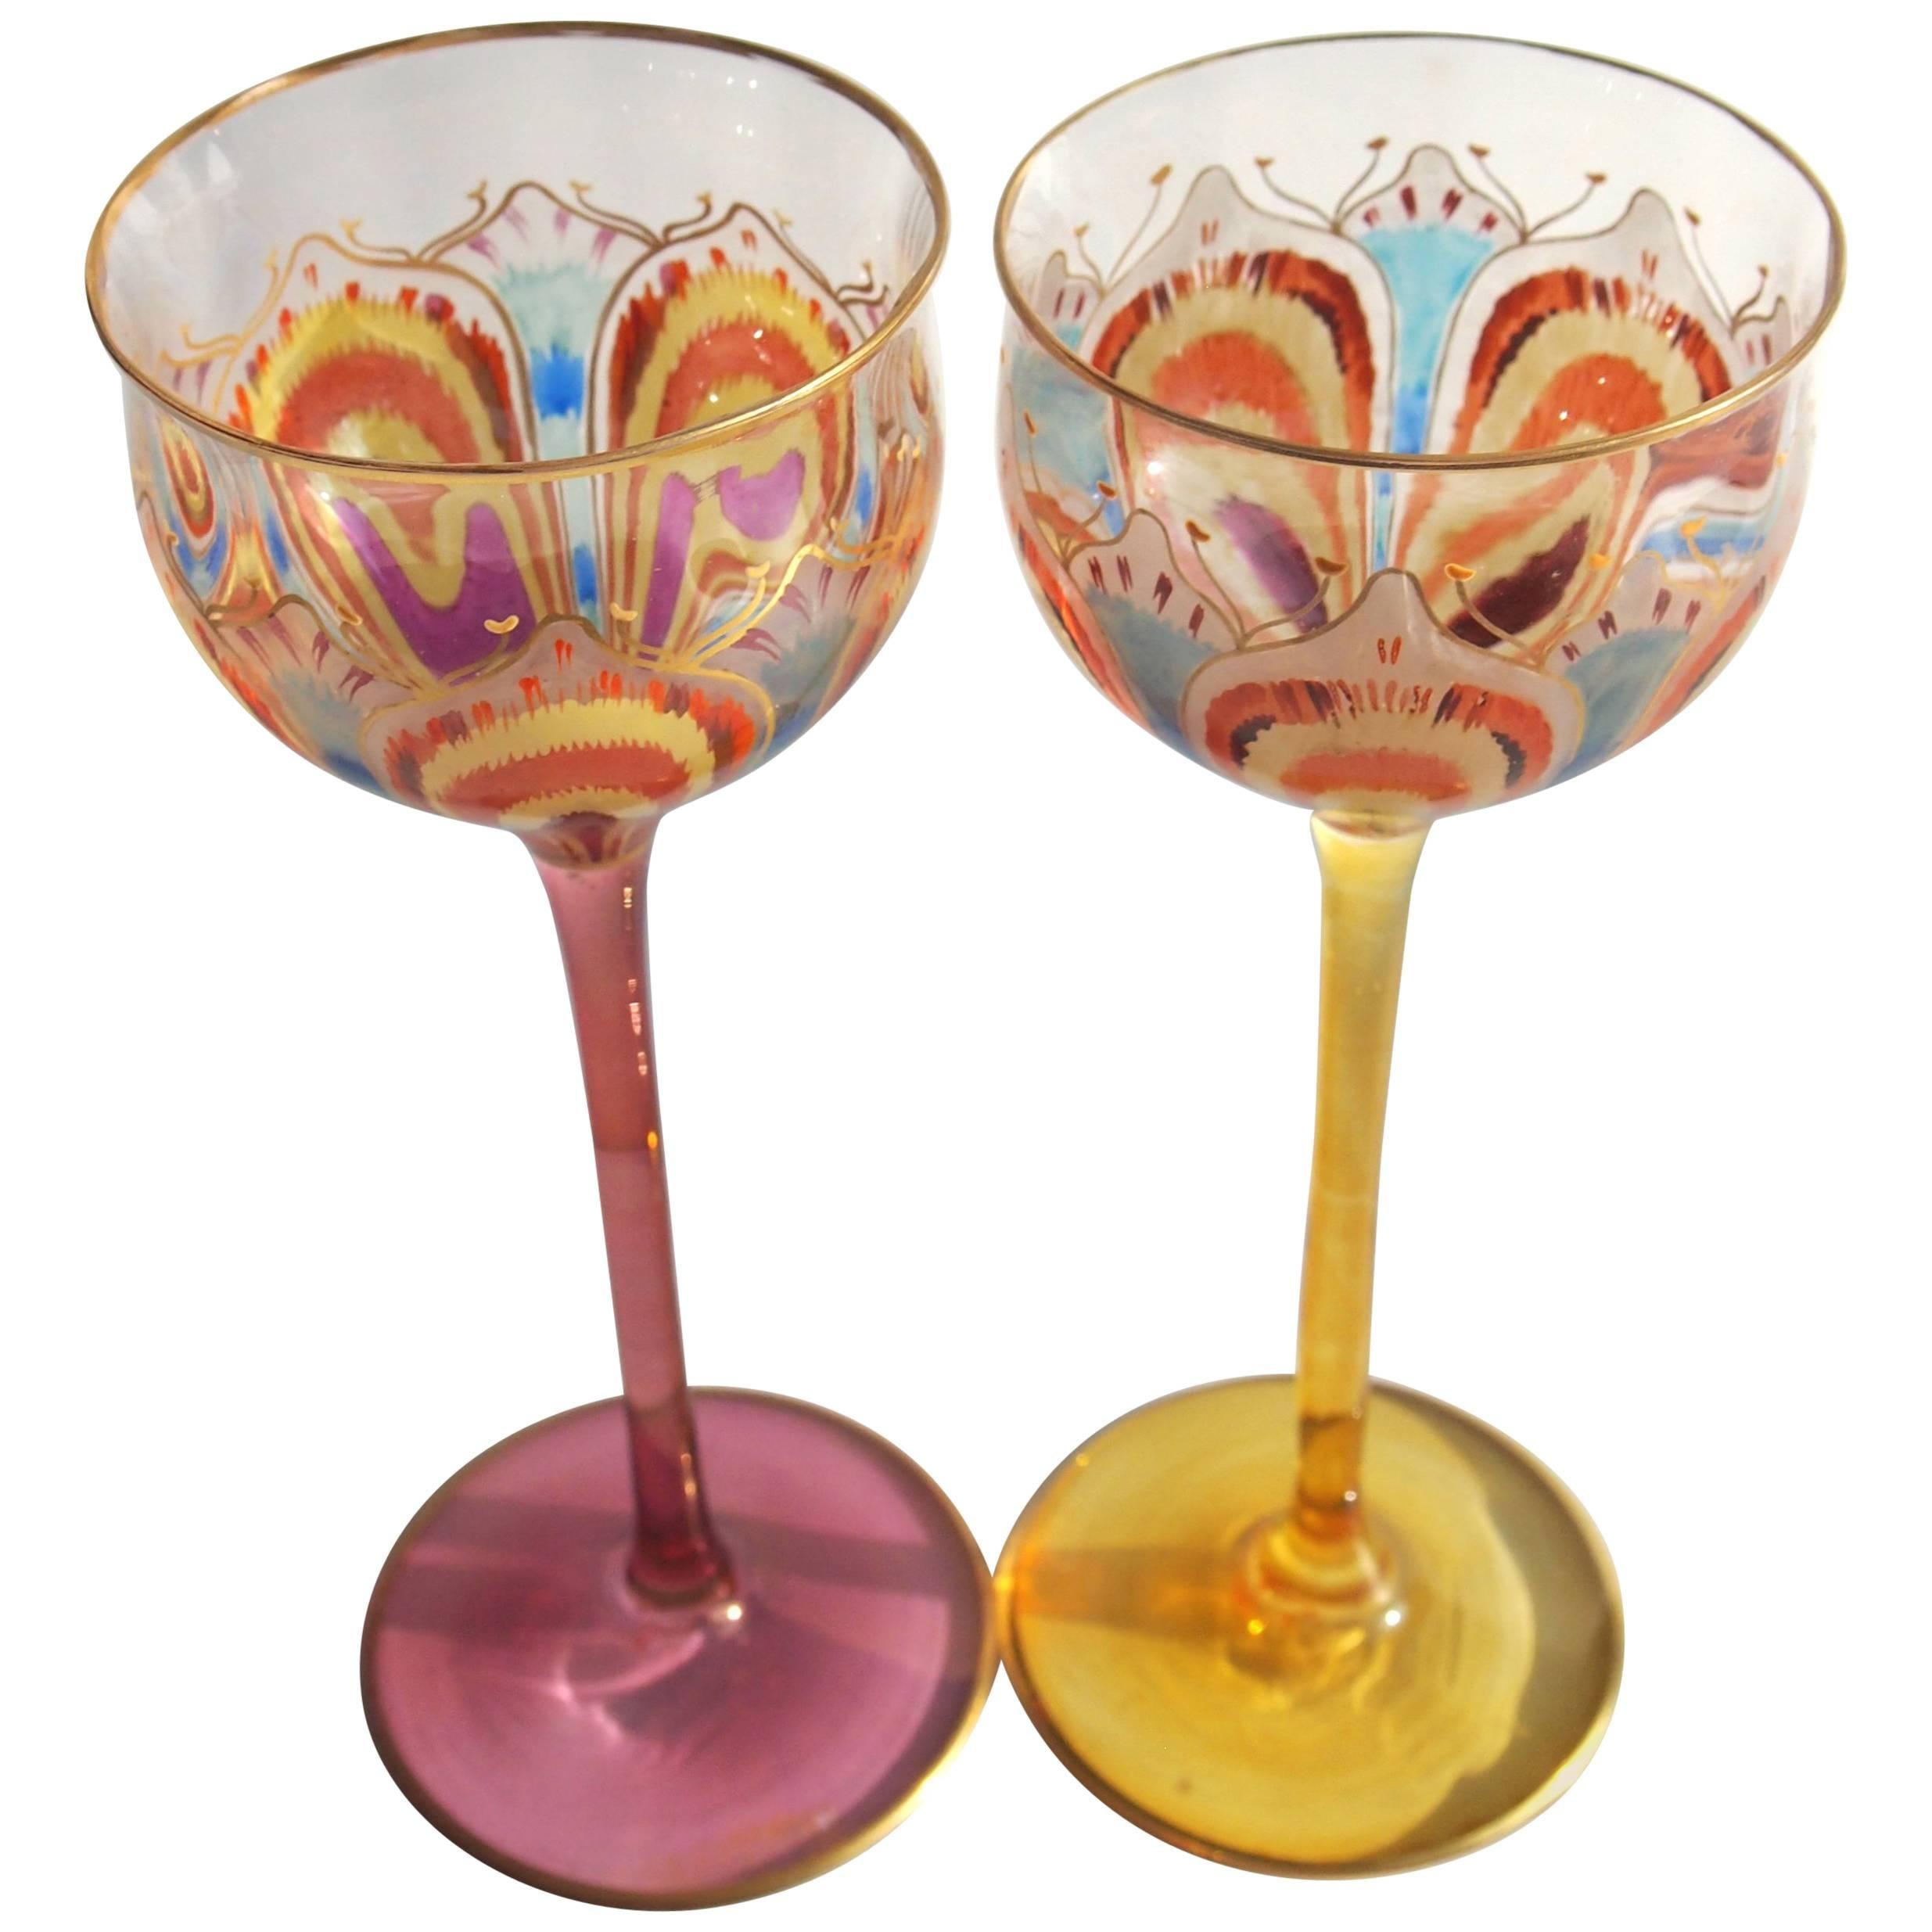 Pair of Art Nouveau Meyr's Neffe Psychodelic Flower Glasses